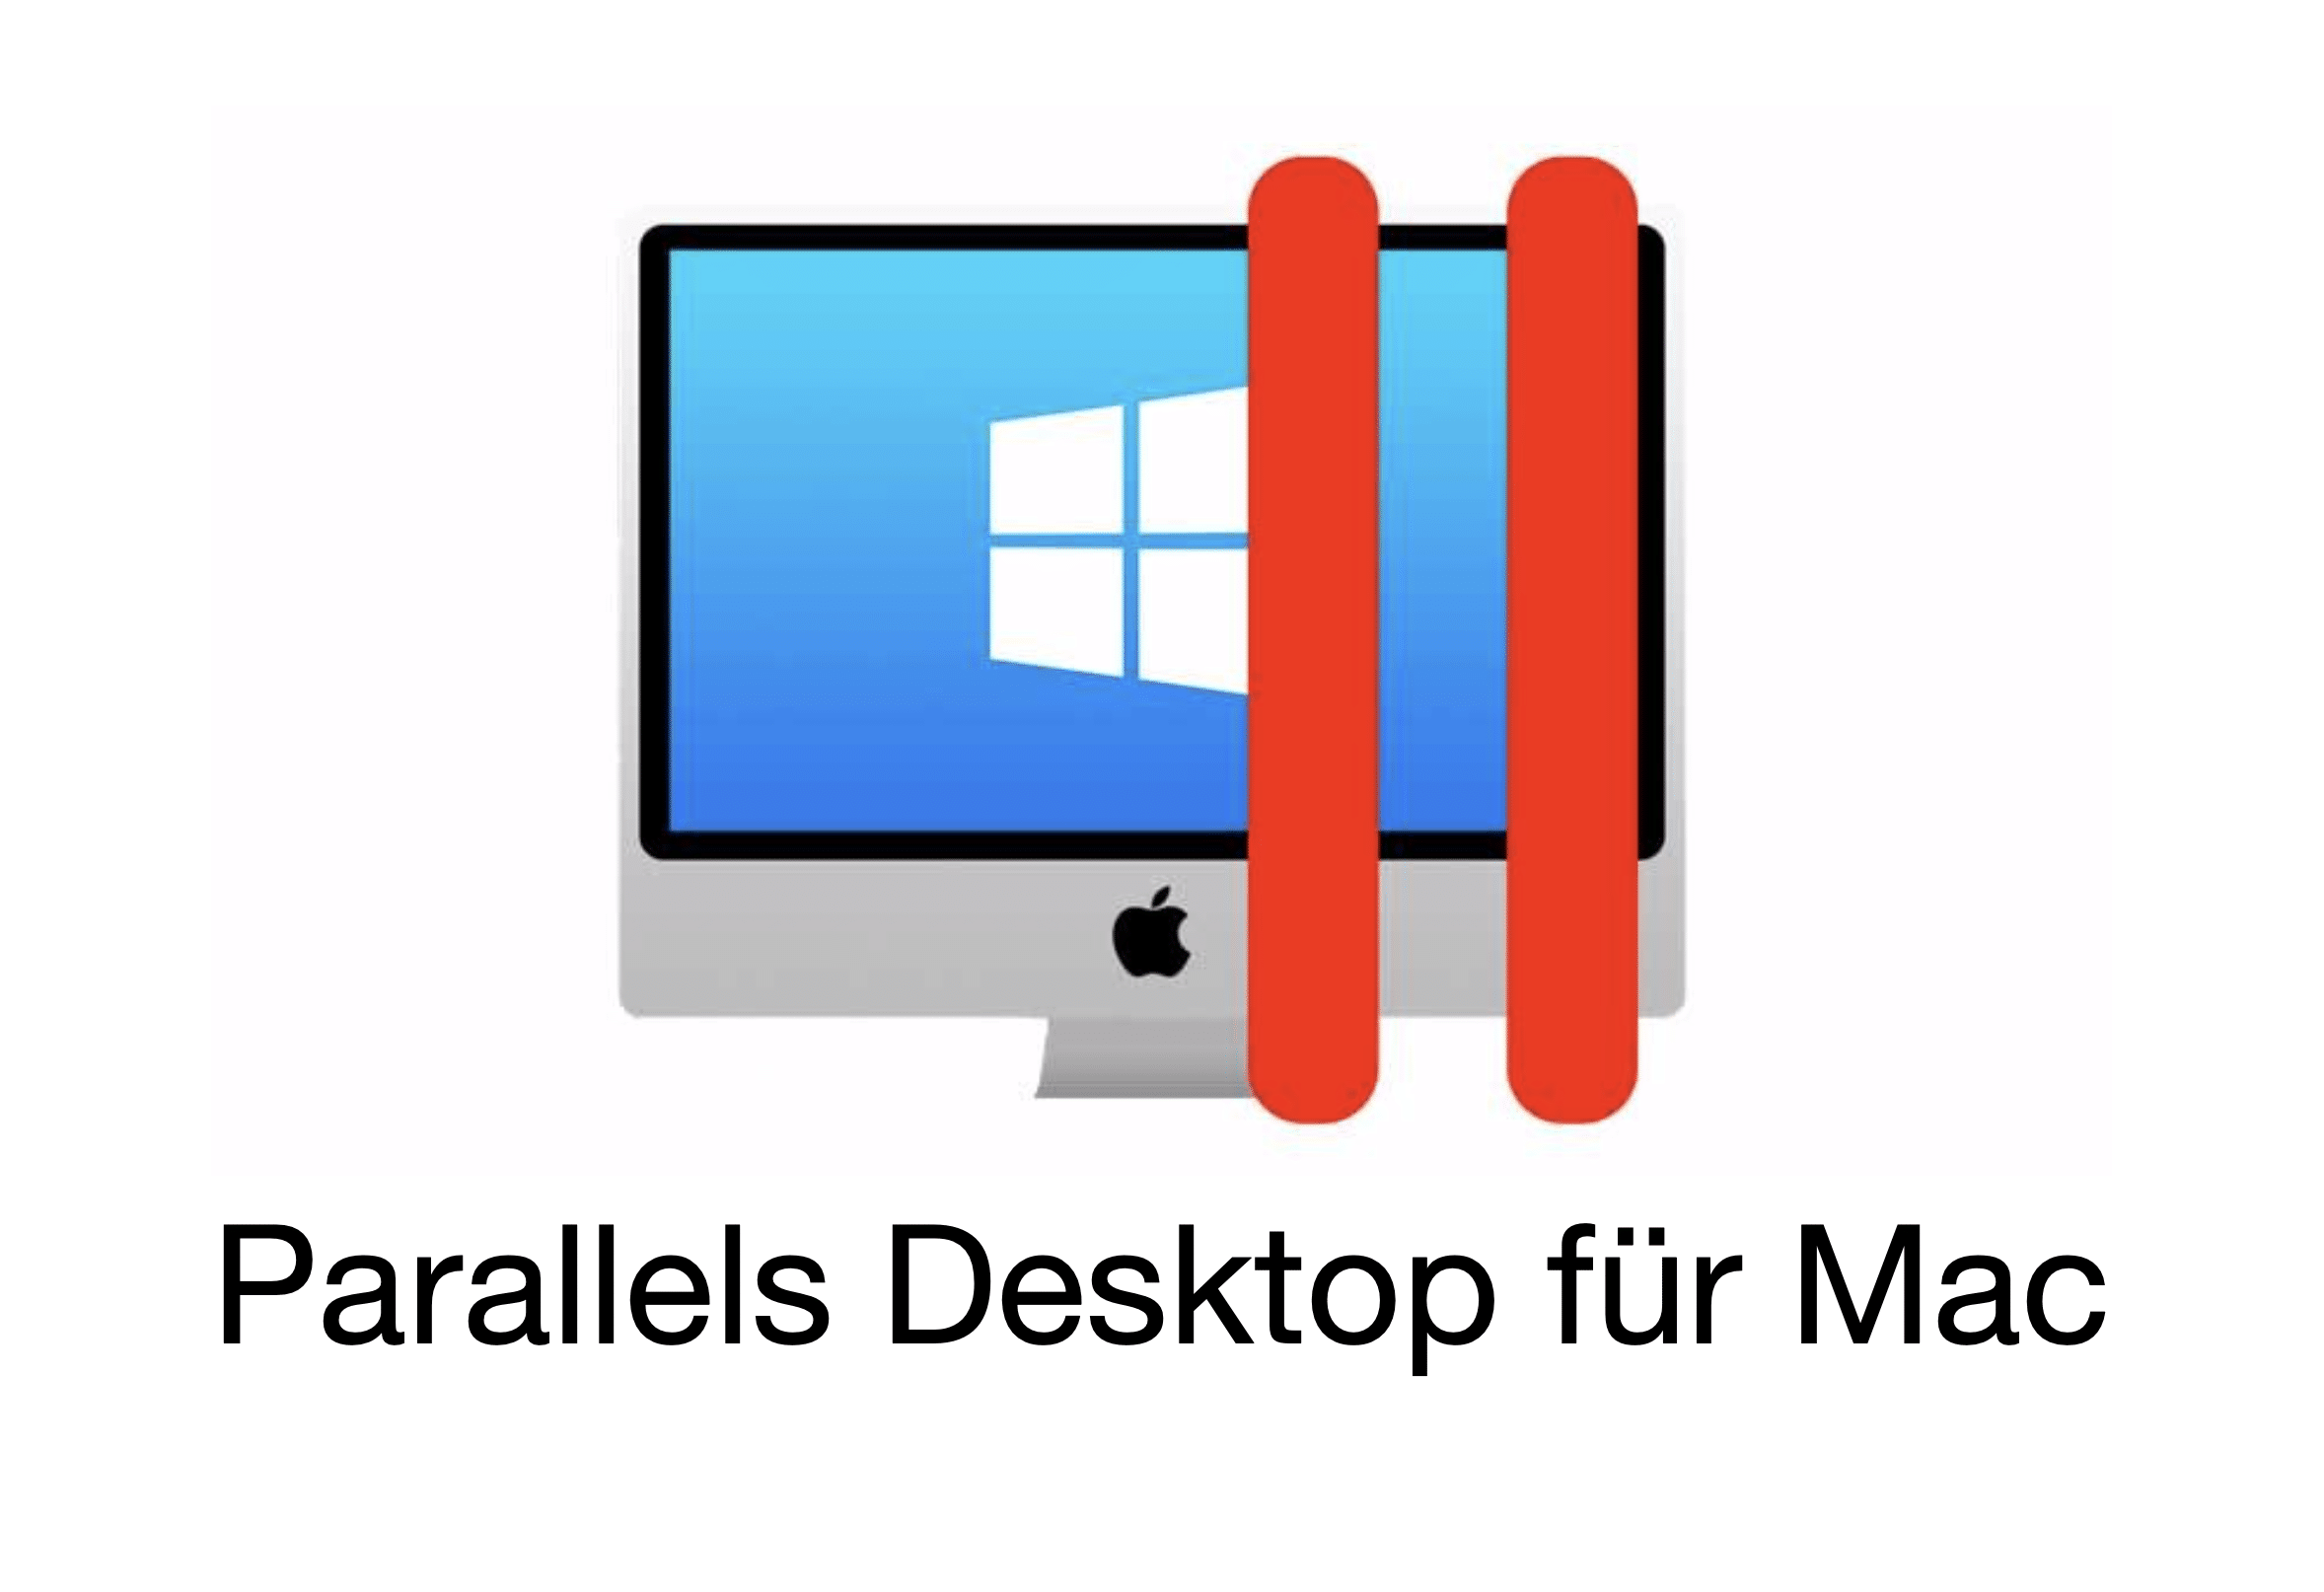 download parallels desktop for mac